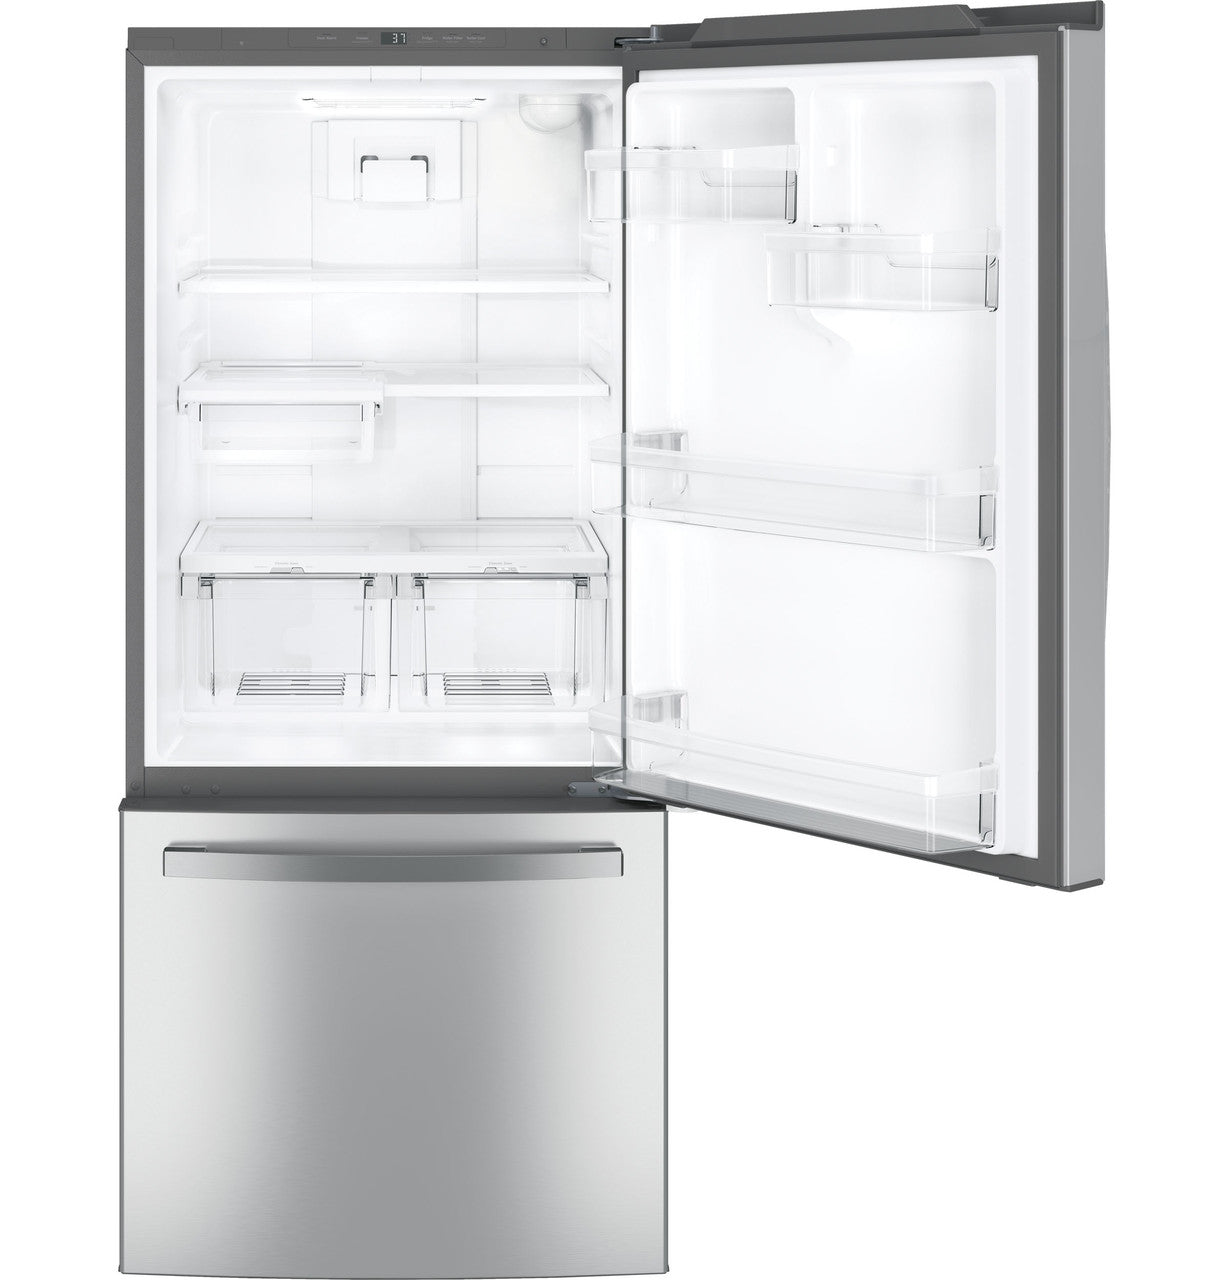 30 inch fridge freezer stainless steel inside